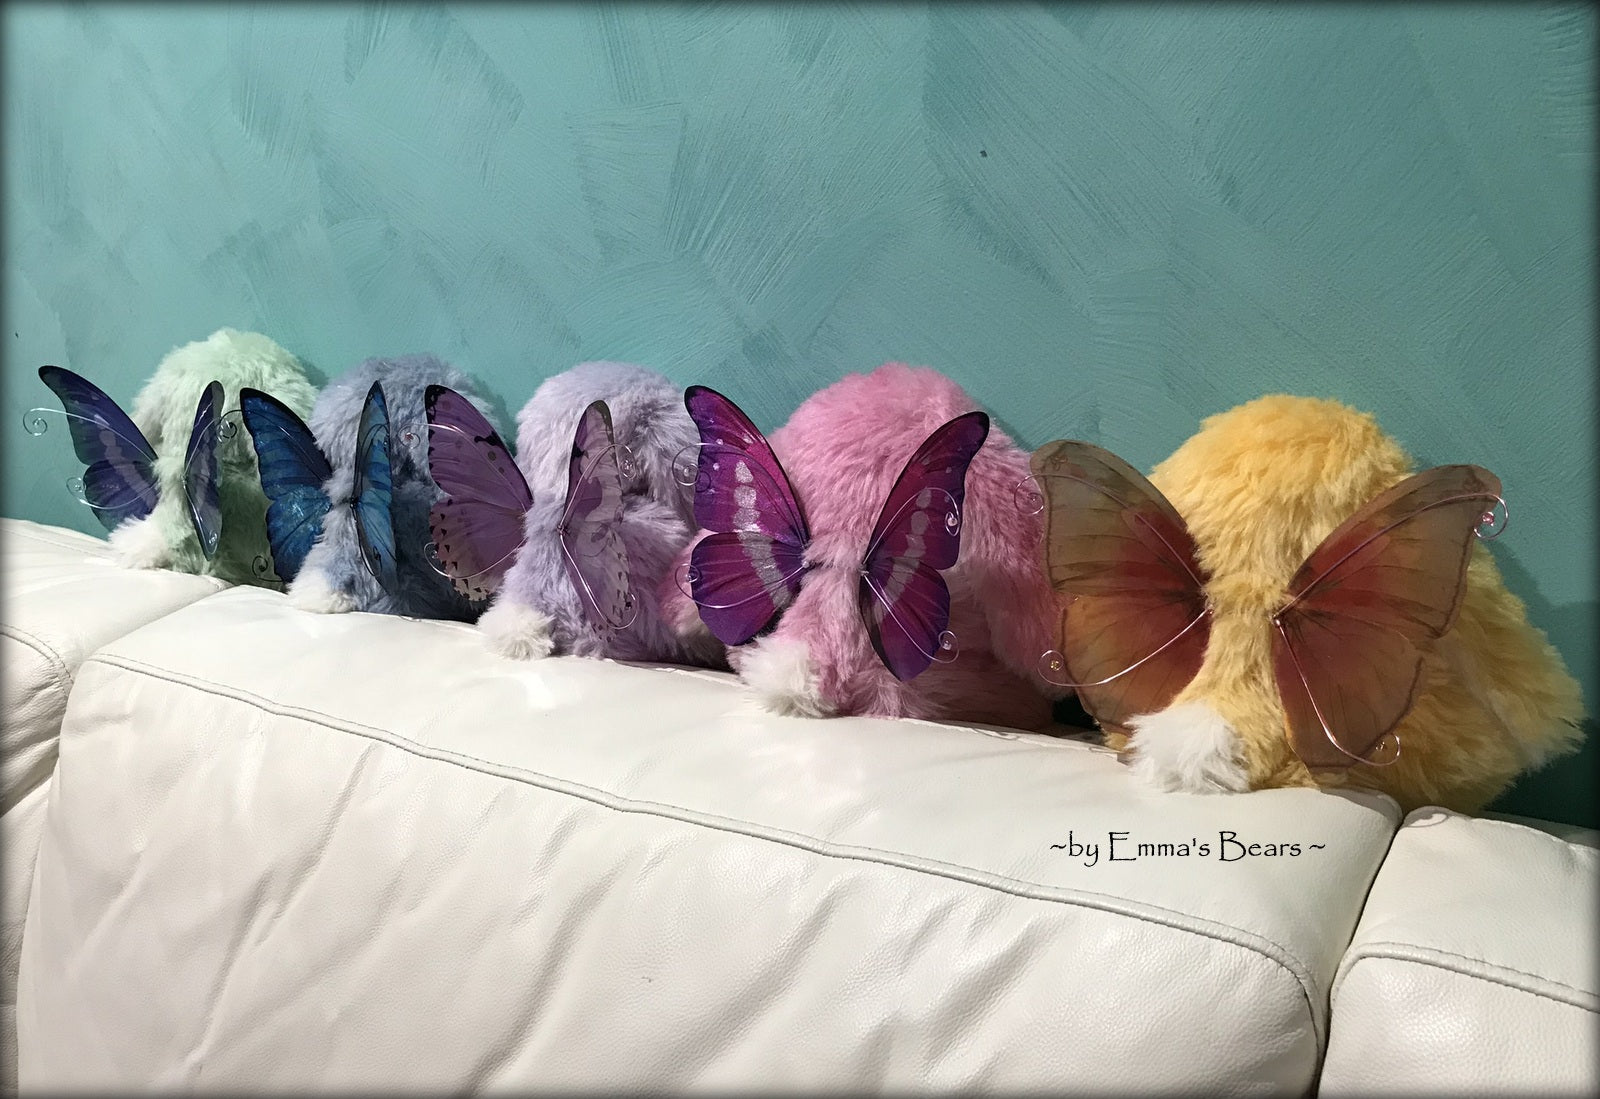 Petal - 9" Hand dyed alpaca artist Easter Bunny by Emma's Bears - OOAK